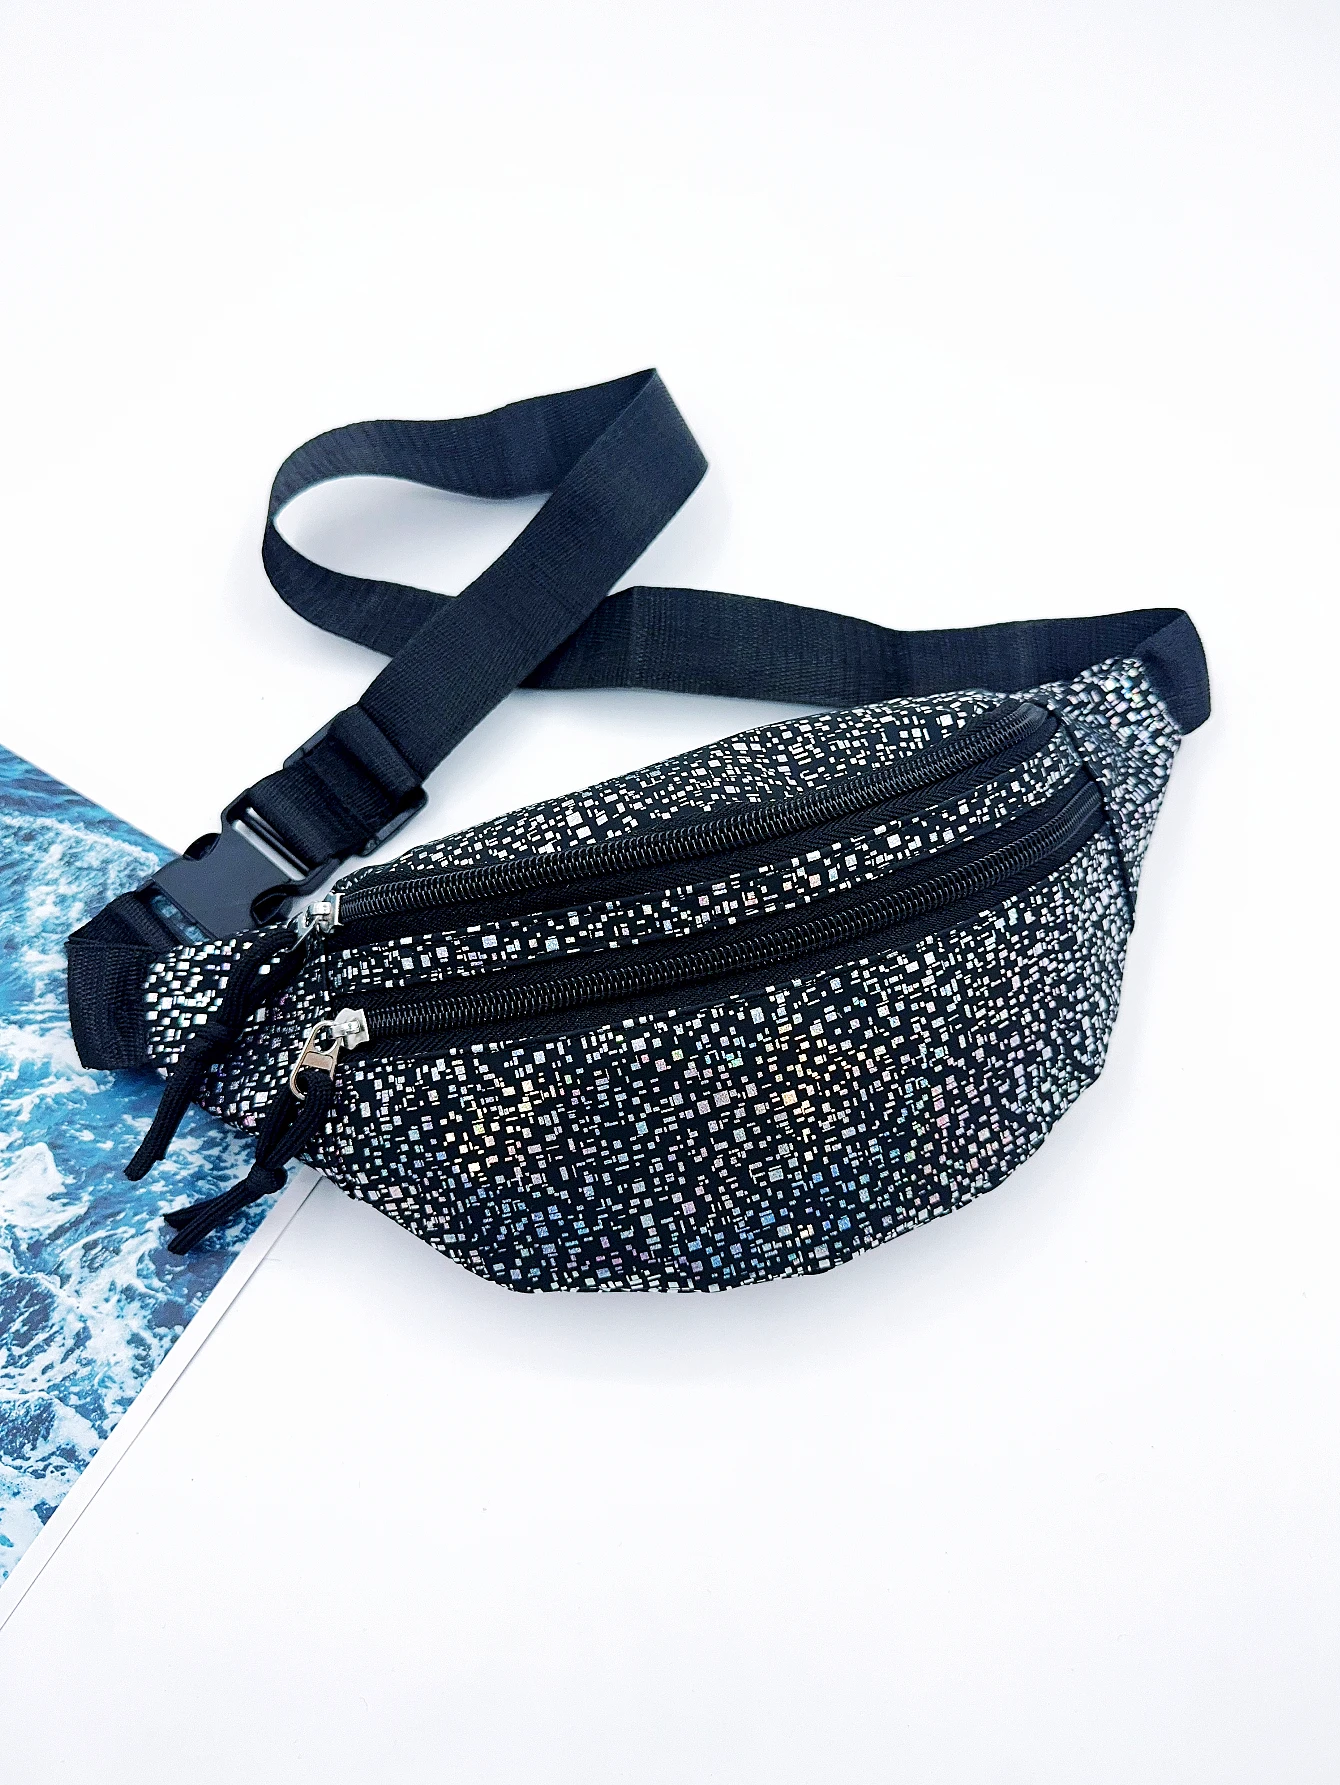 

Sparkly Holographic Fanny Pack Belt Bag for Women I Travel CrossBody Fanny Packs for Women Fashion Waist Pack Bum Bag